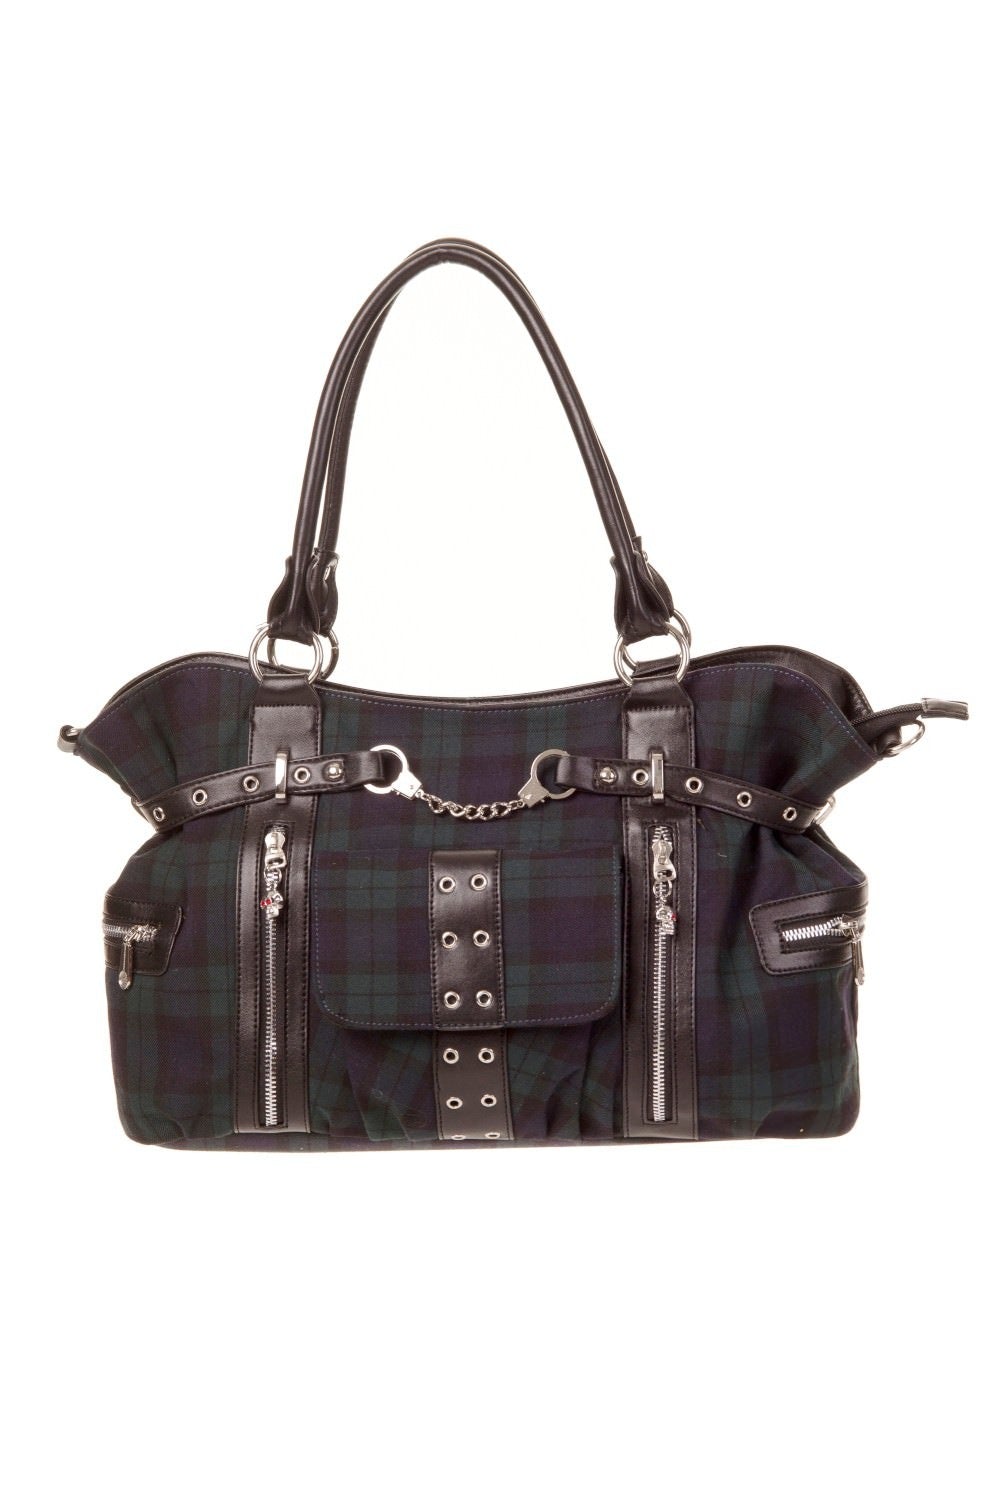 Green tartan shoulder handbag with small handcuff detail